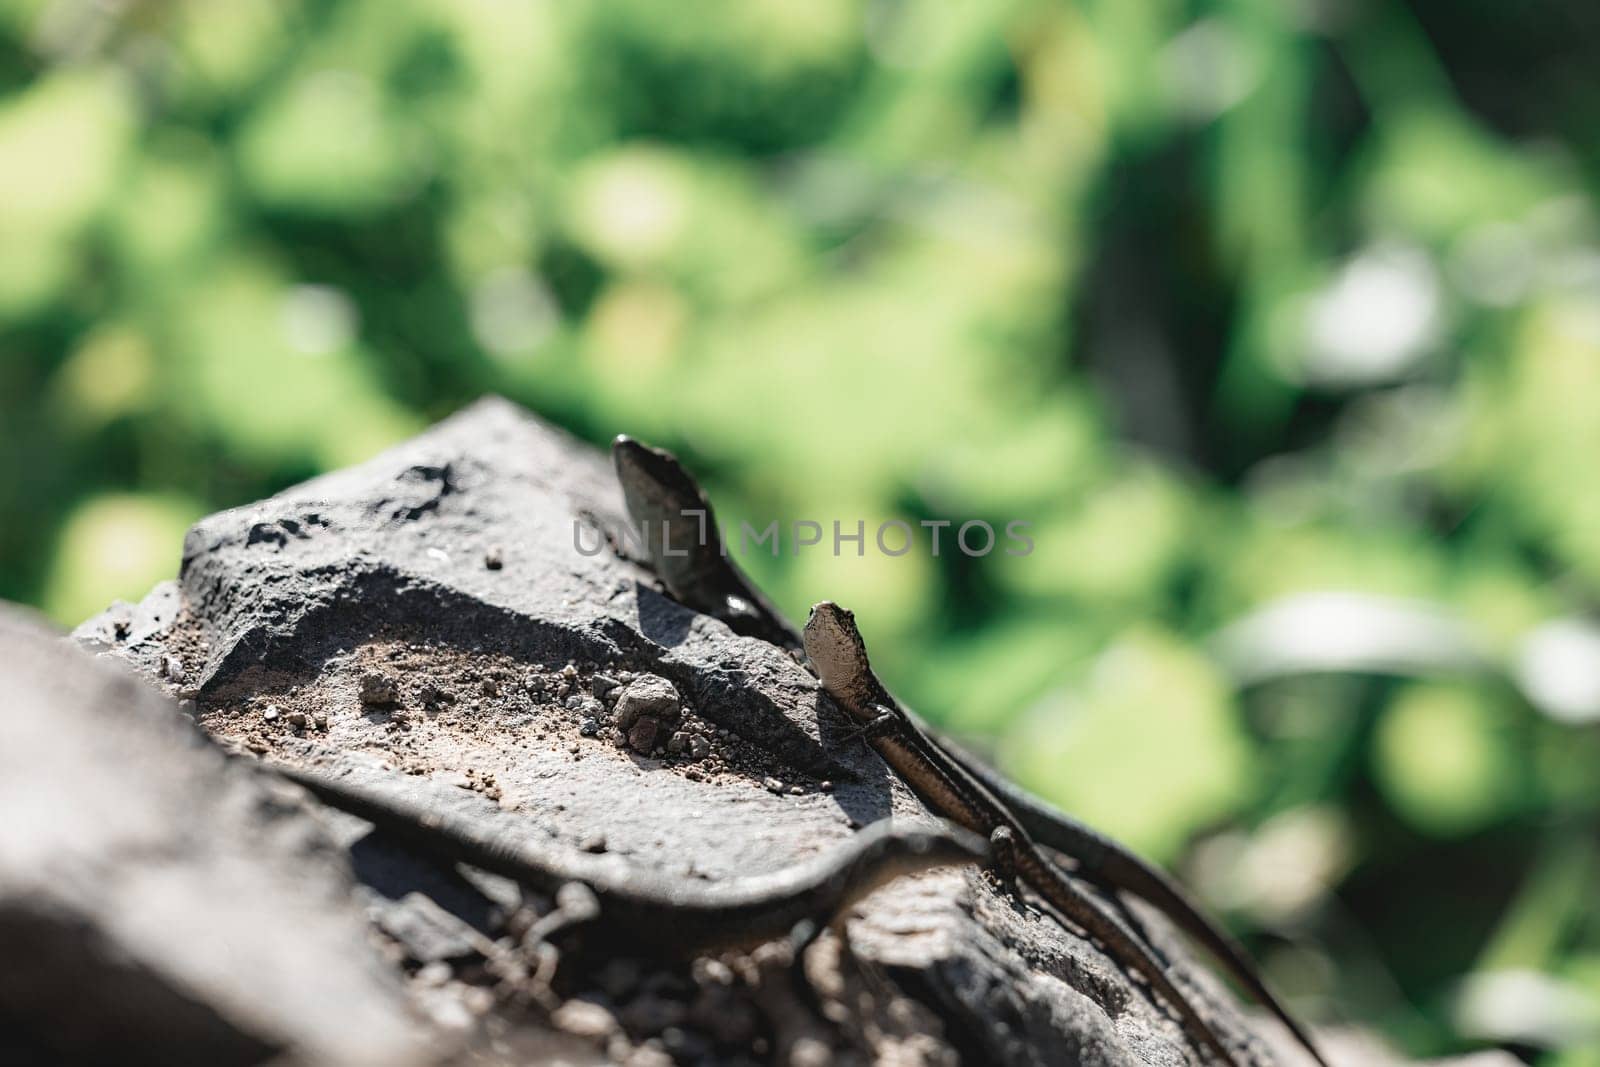 A closeup of a lizard on a stone